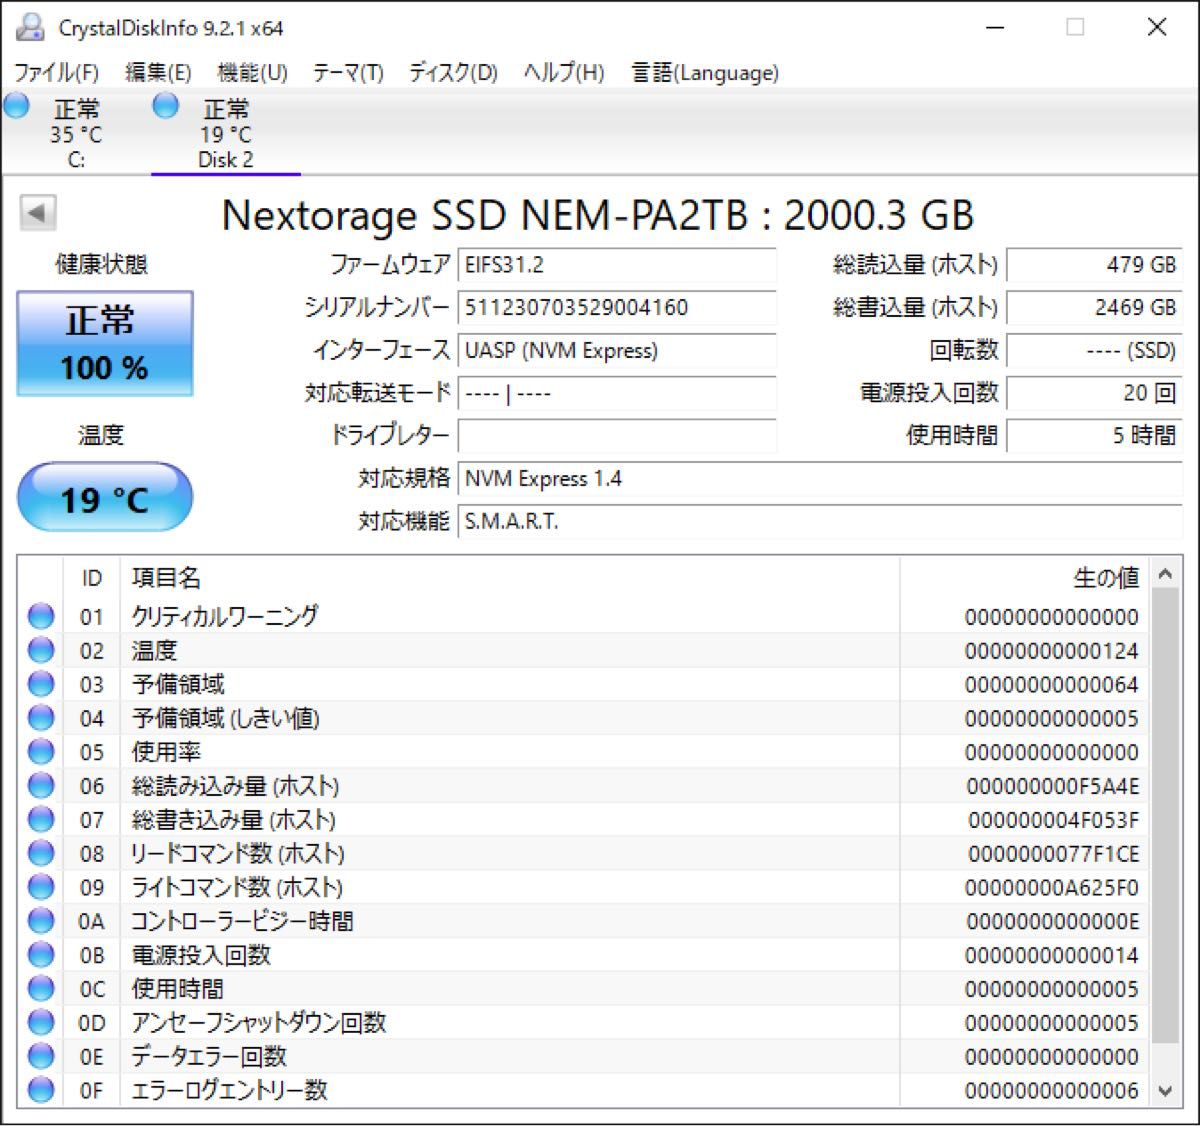 Nextorage PS5 SSD with Heatsink 2TB SSD NVMe M.2 2280